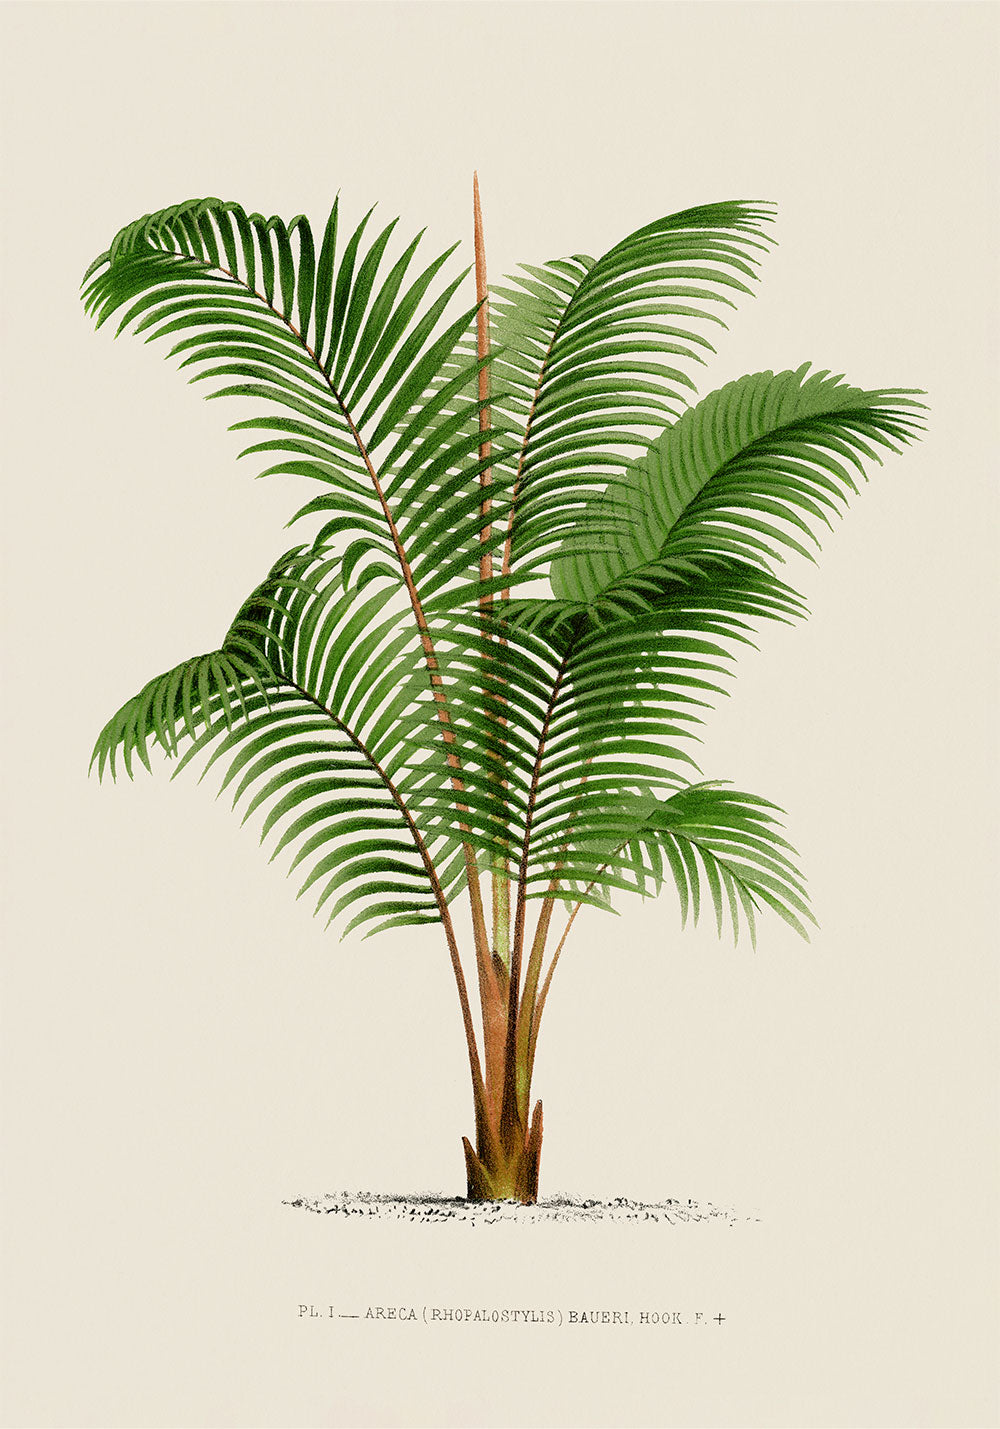 Areca Bauer Palm Tree Art Print by Pieter Joseph de Pannemaeker